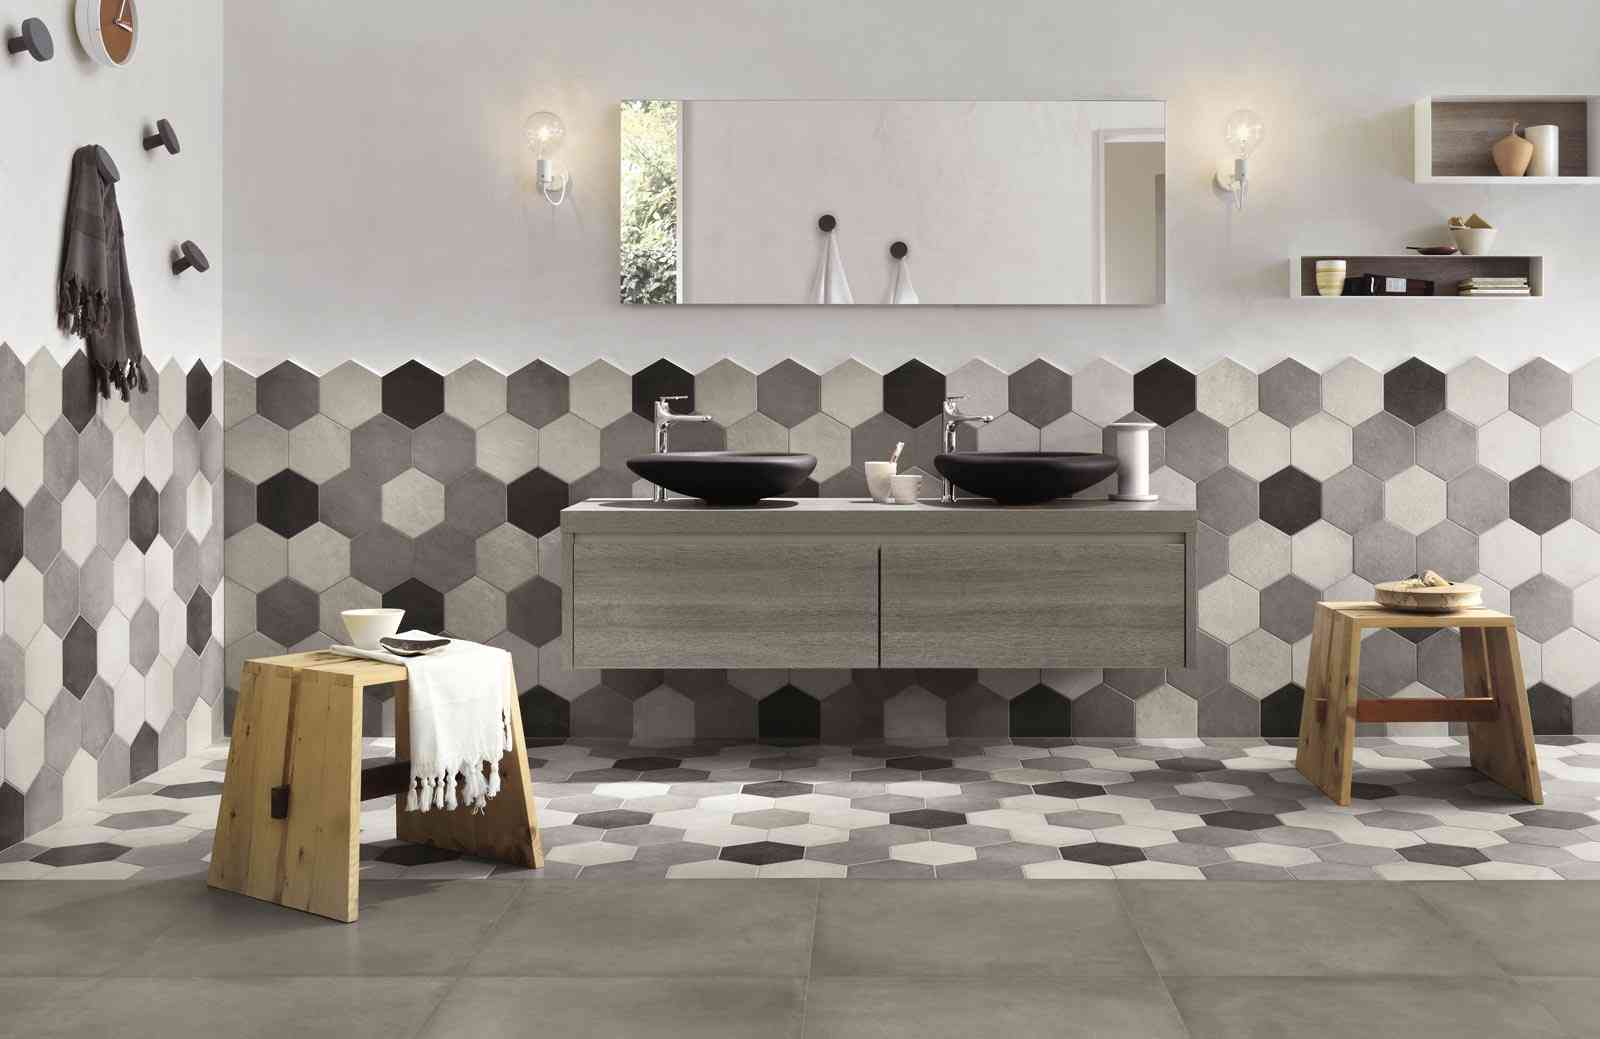 Bathroom Walls Hexagon Tiles